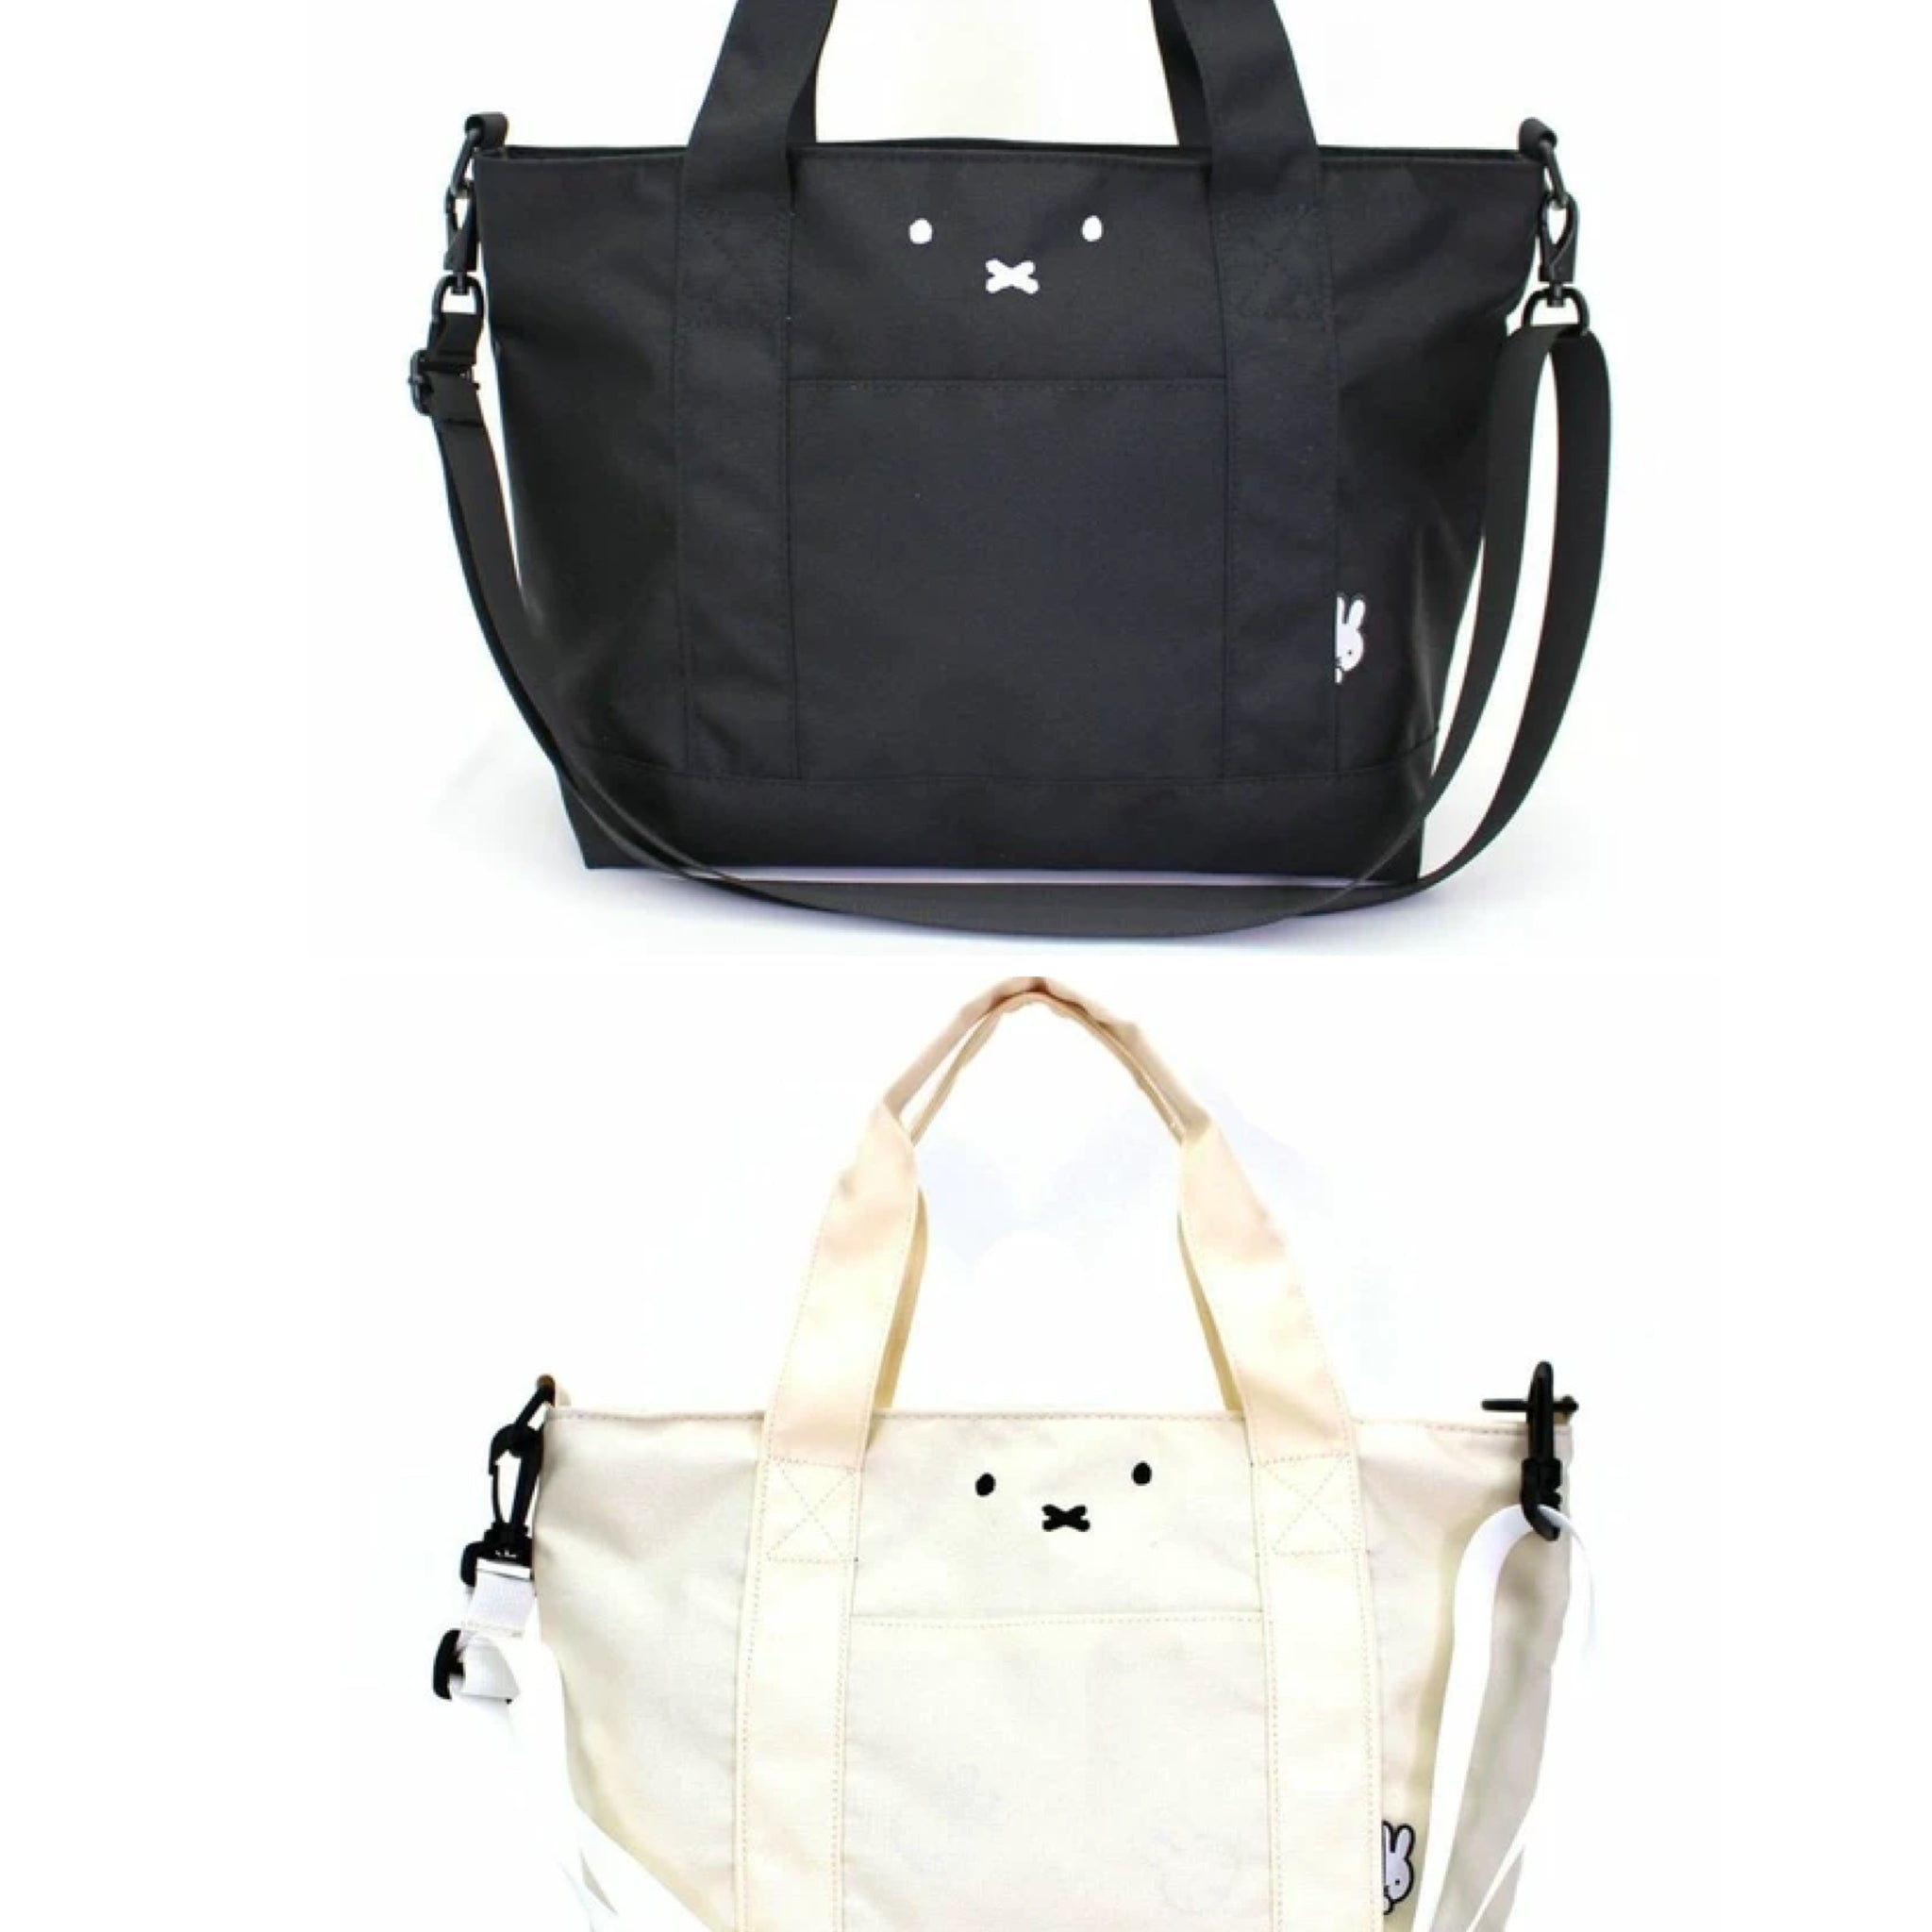 Miffy Shoulder Tote Bag (C-3)